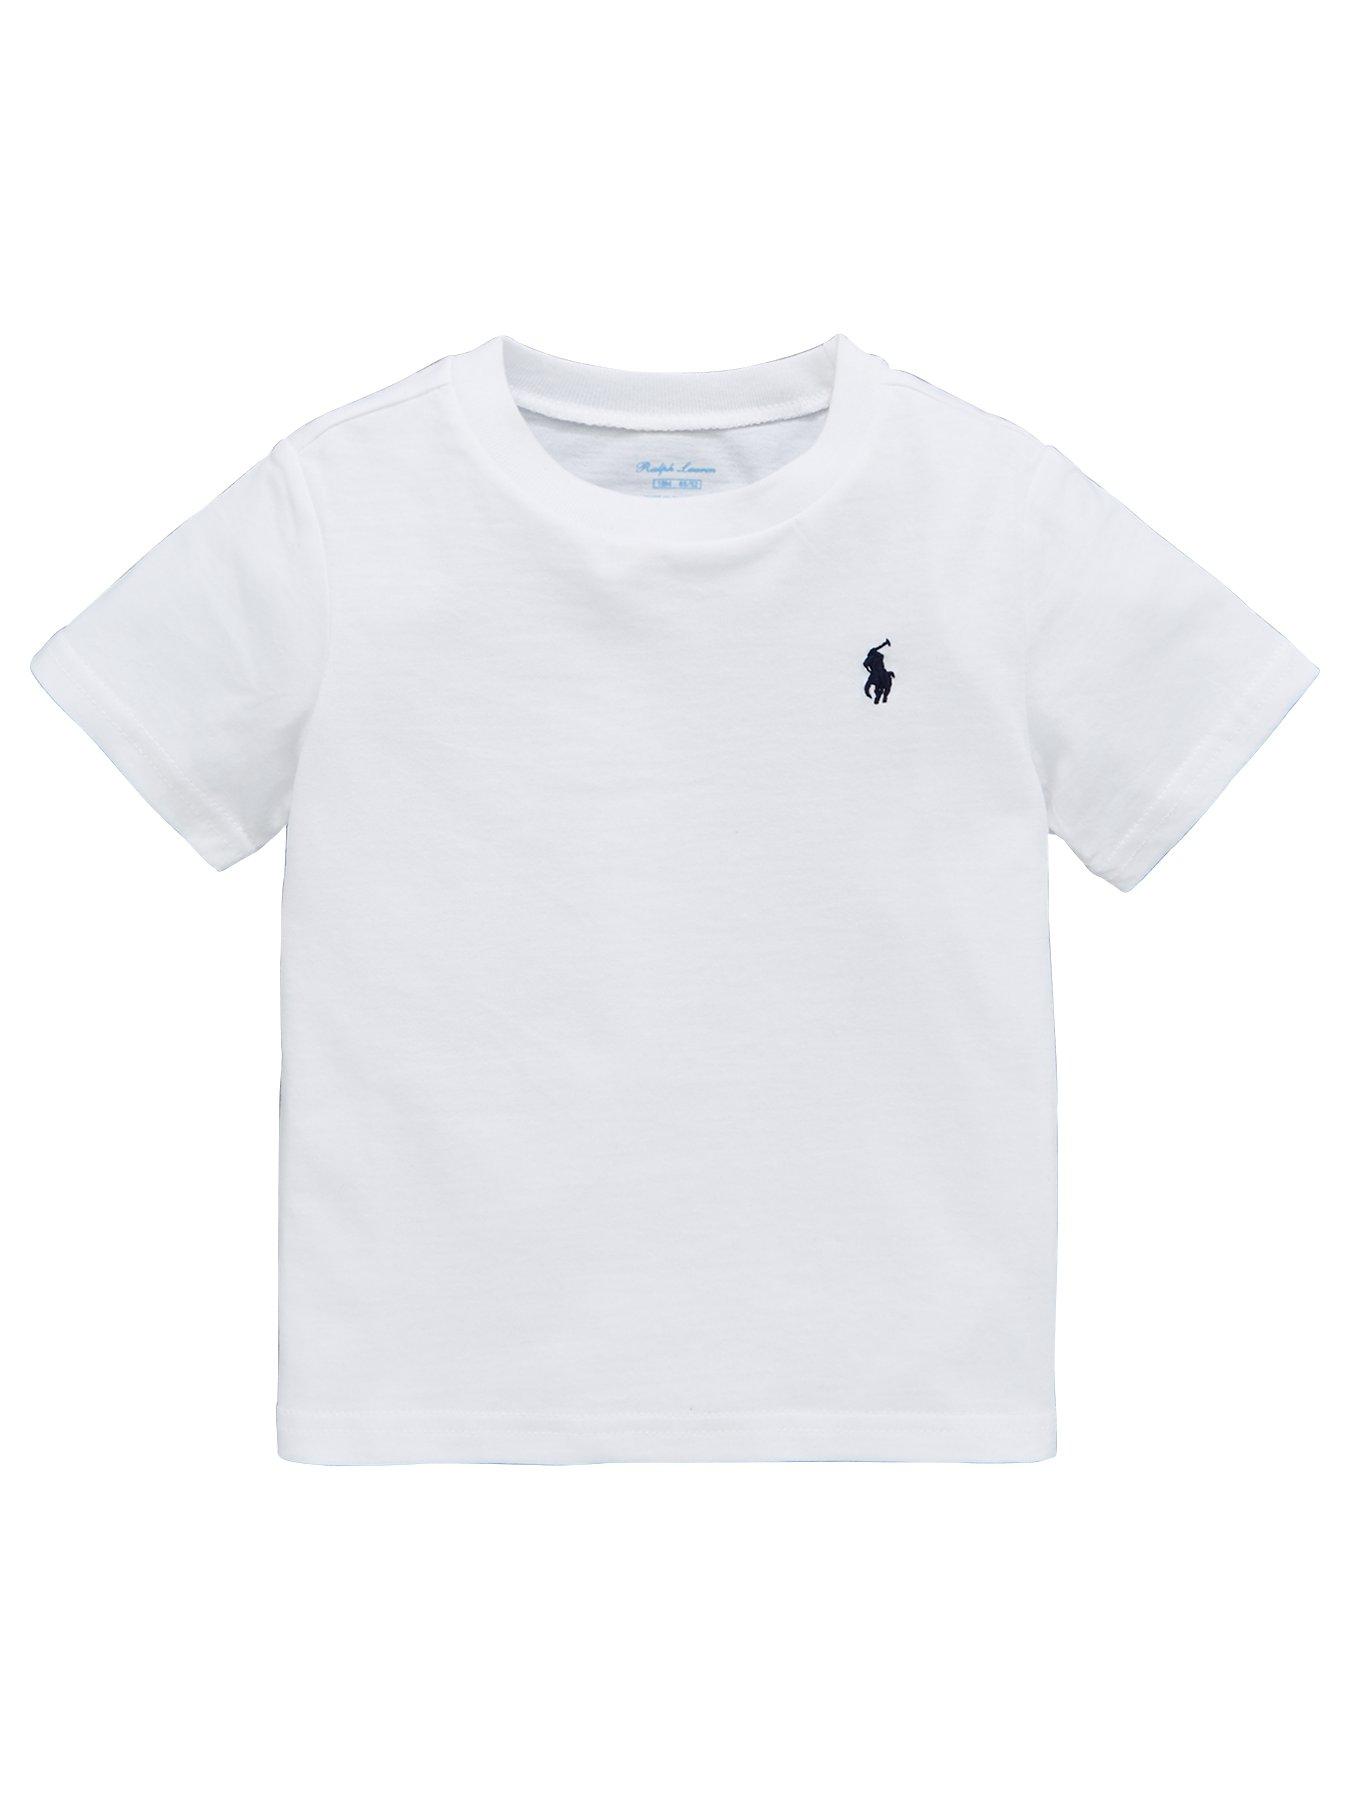 baby boy white ralph lauren shirt